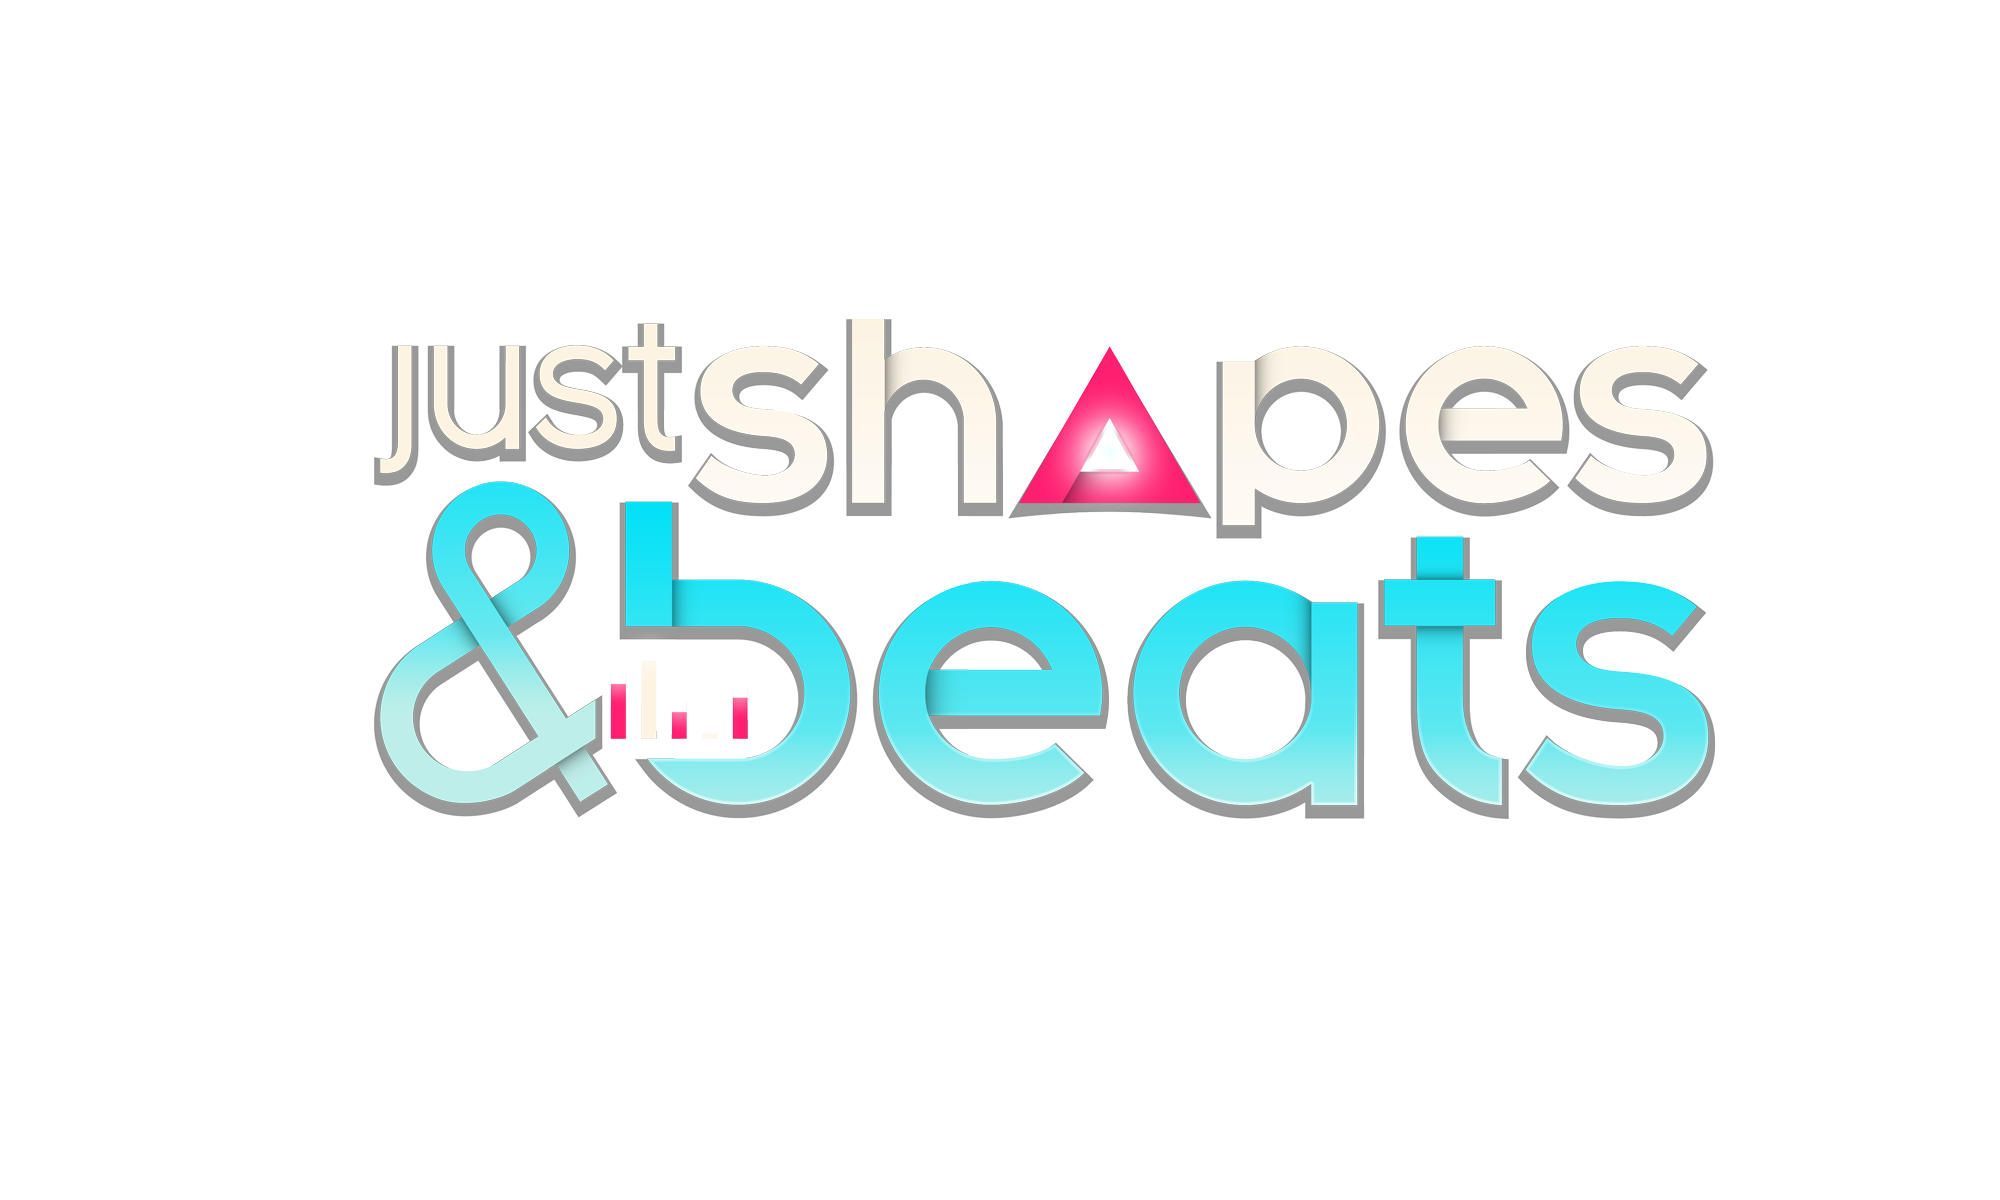 Just Shapes & Beats - IGN